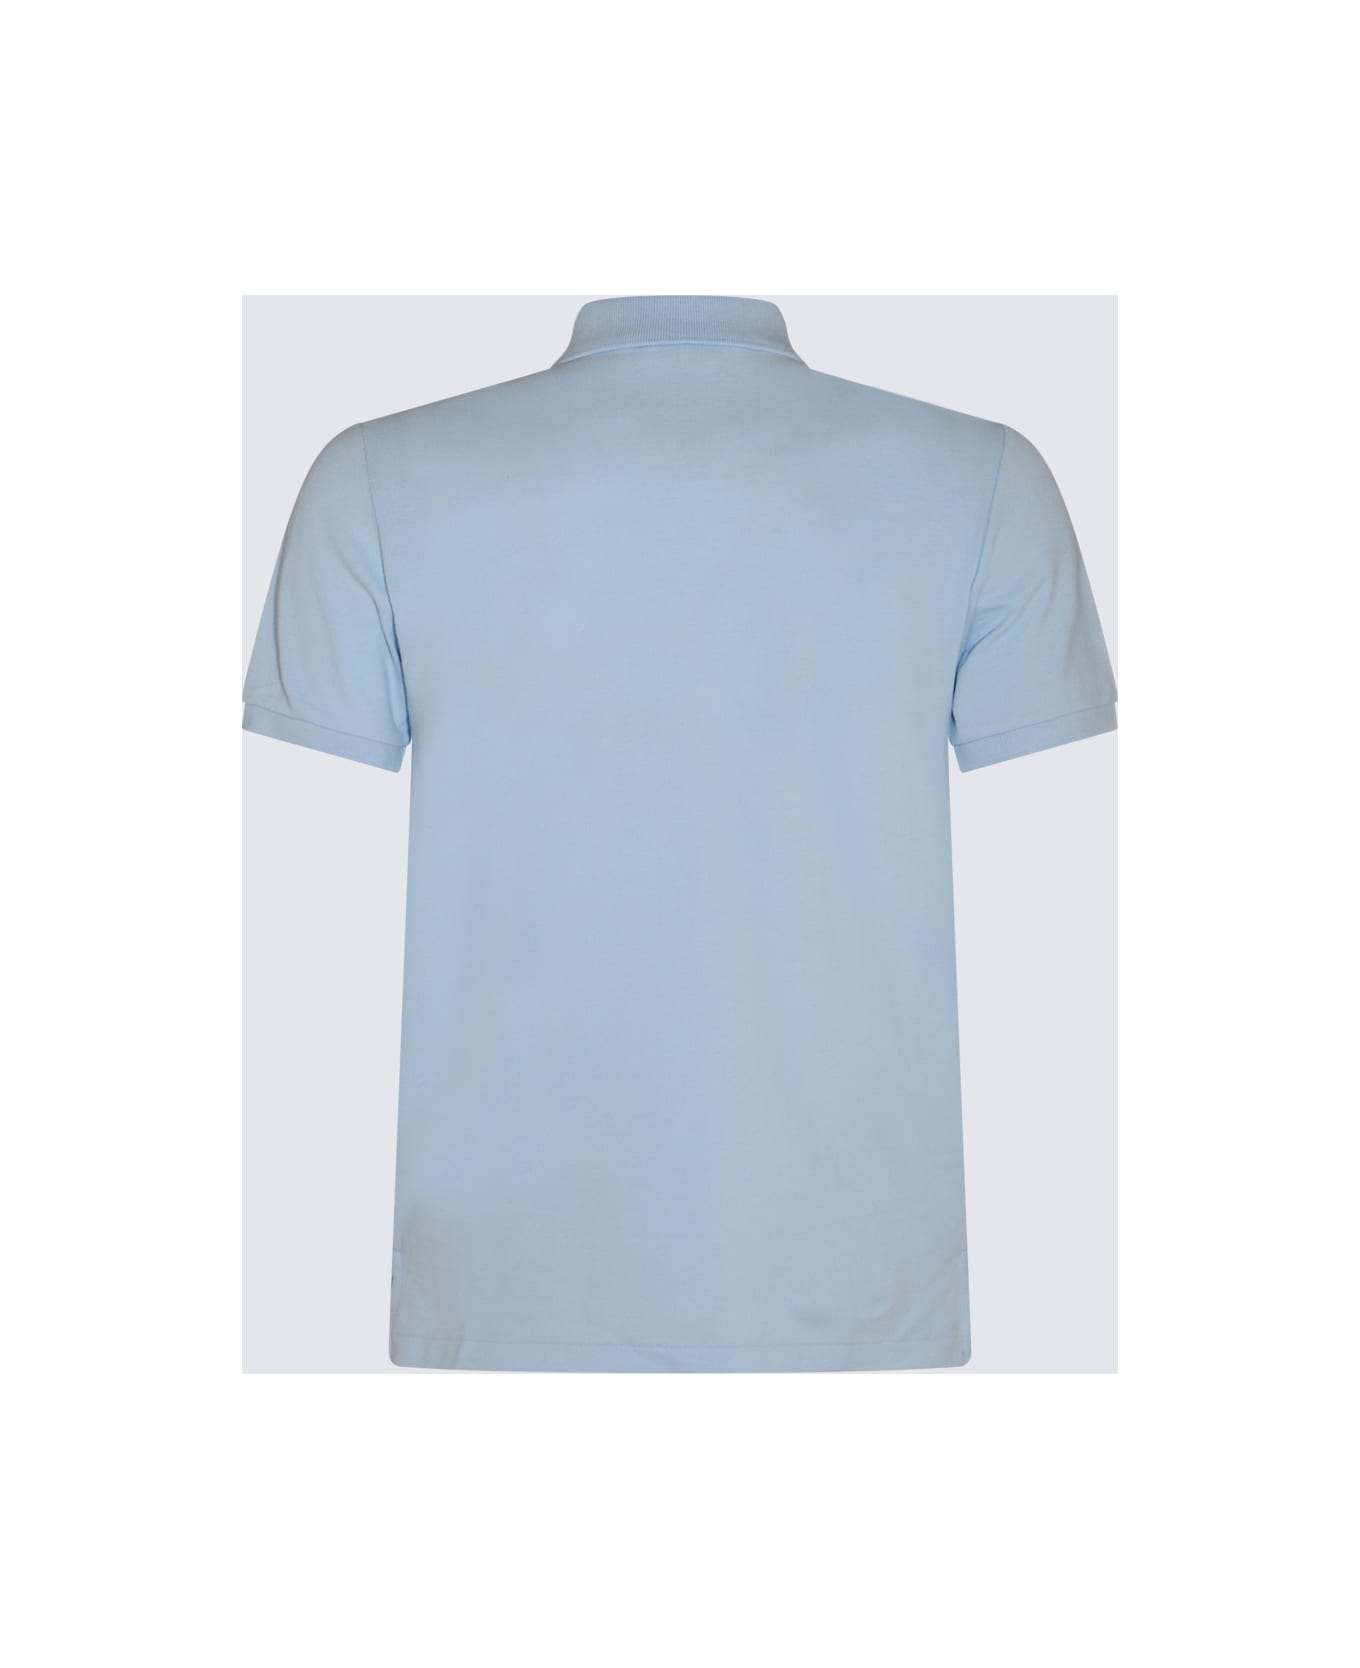 Polo Ralph Lauren Light Blue Cotton Polo Shirt - OFFICE BLUE ポロシャツ